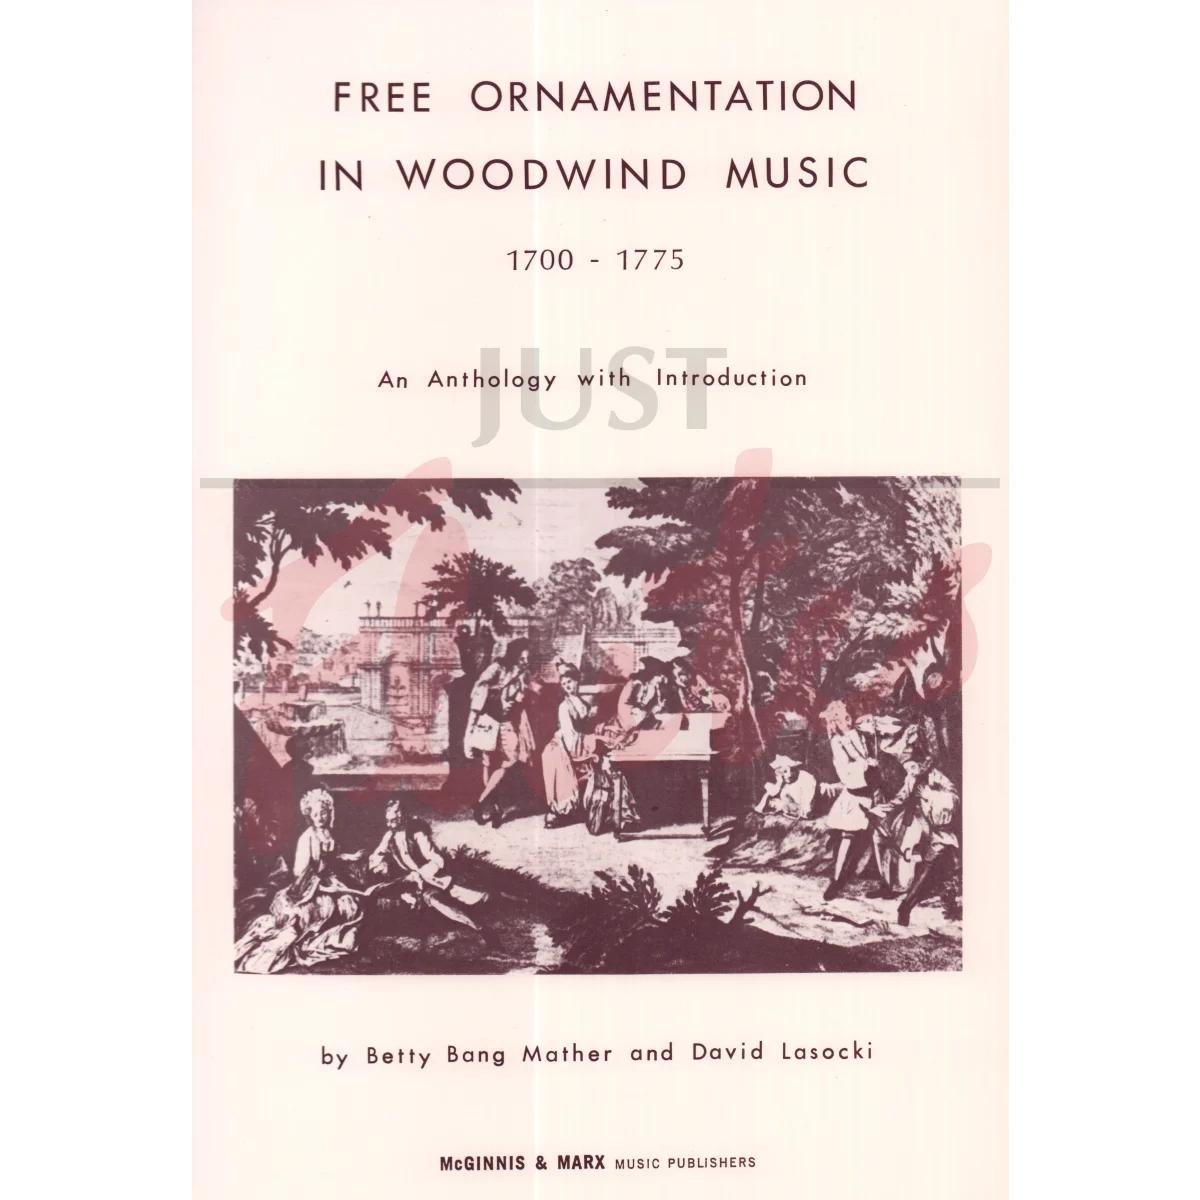 Free Ornamentation in Woodwind Music 1700-1775